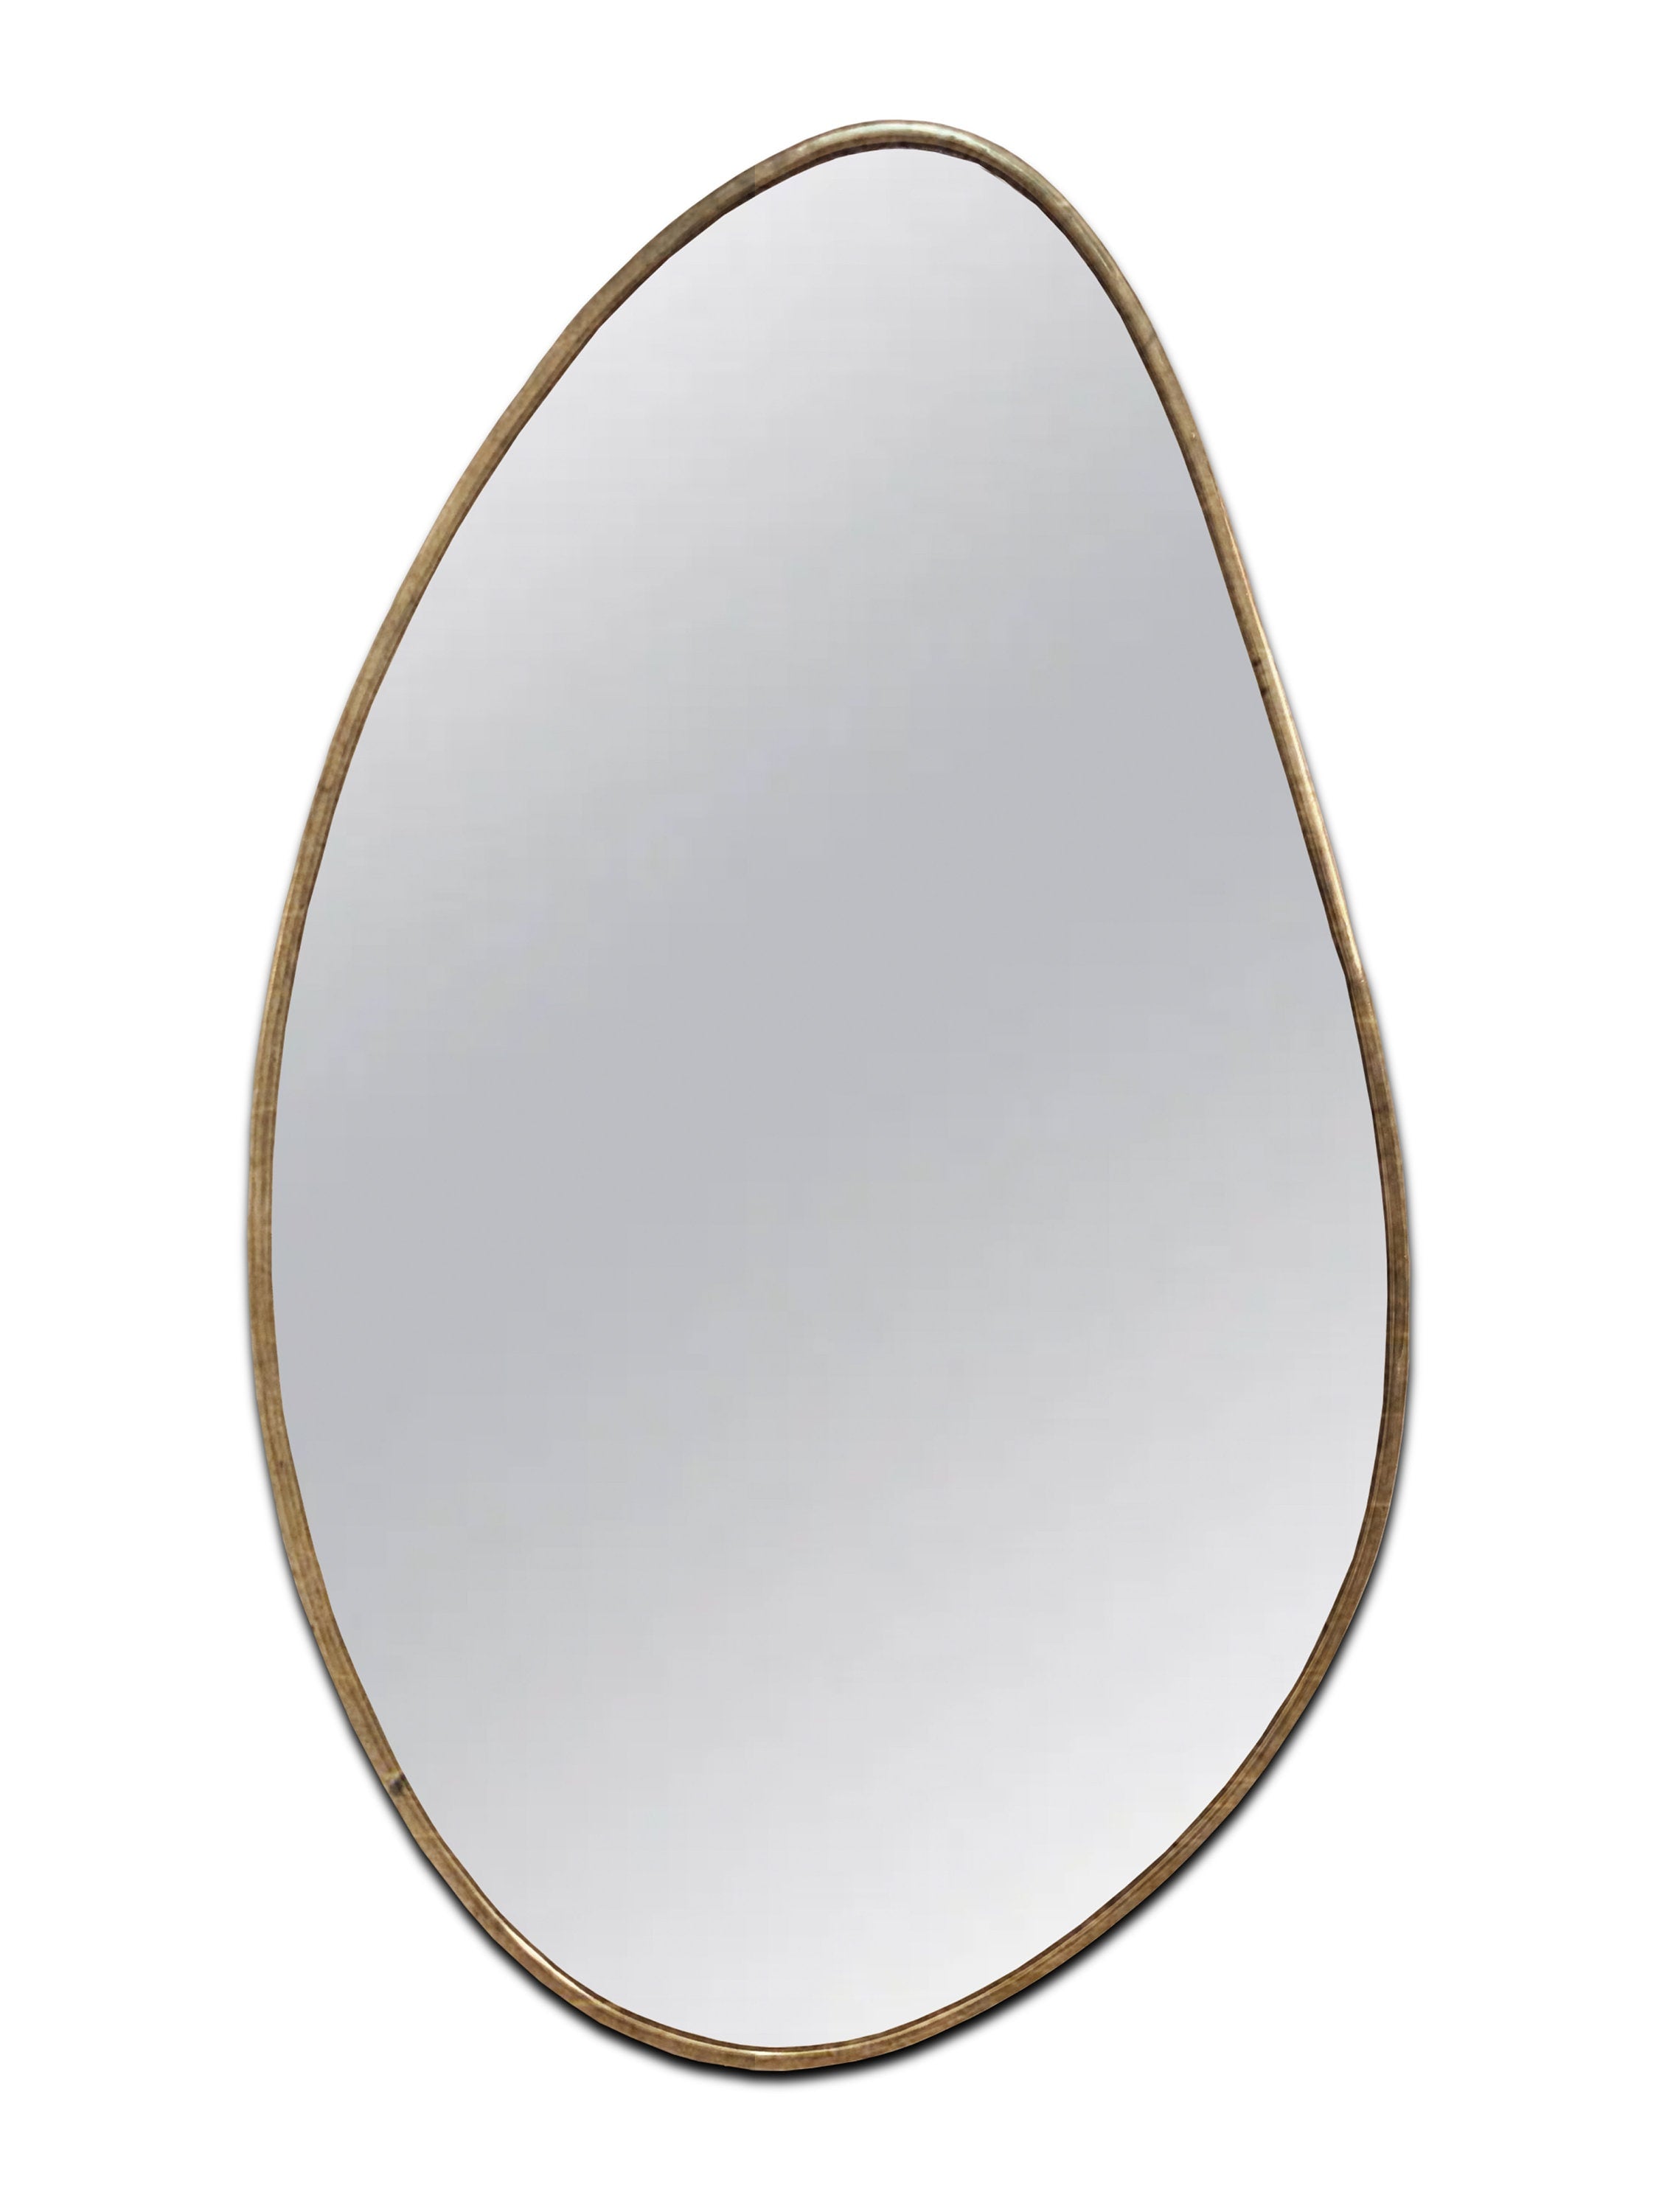 Handmade Asymmetrical Brass Mirror | Unique Home Decor | Artistic Wall Hanging Mirror - Zayian